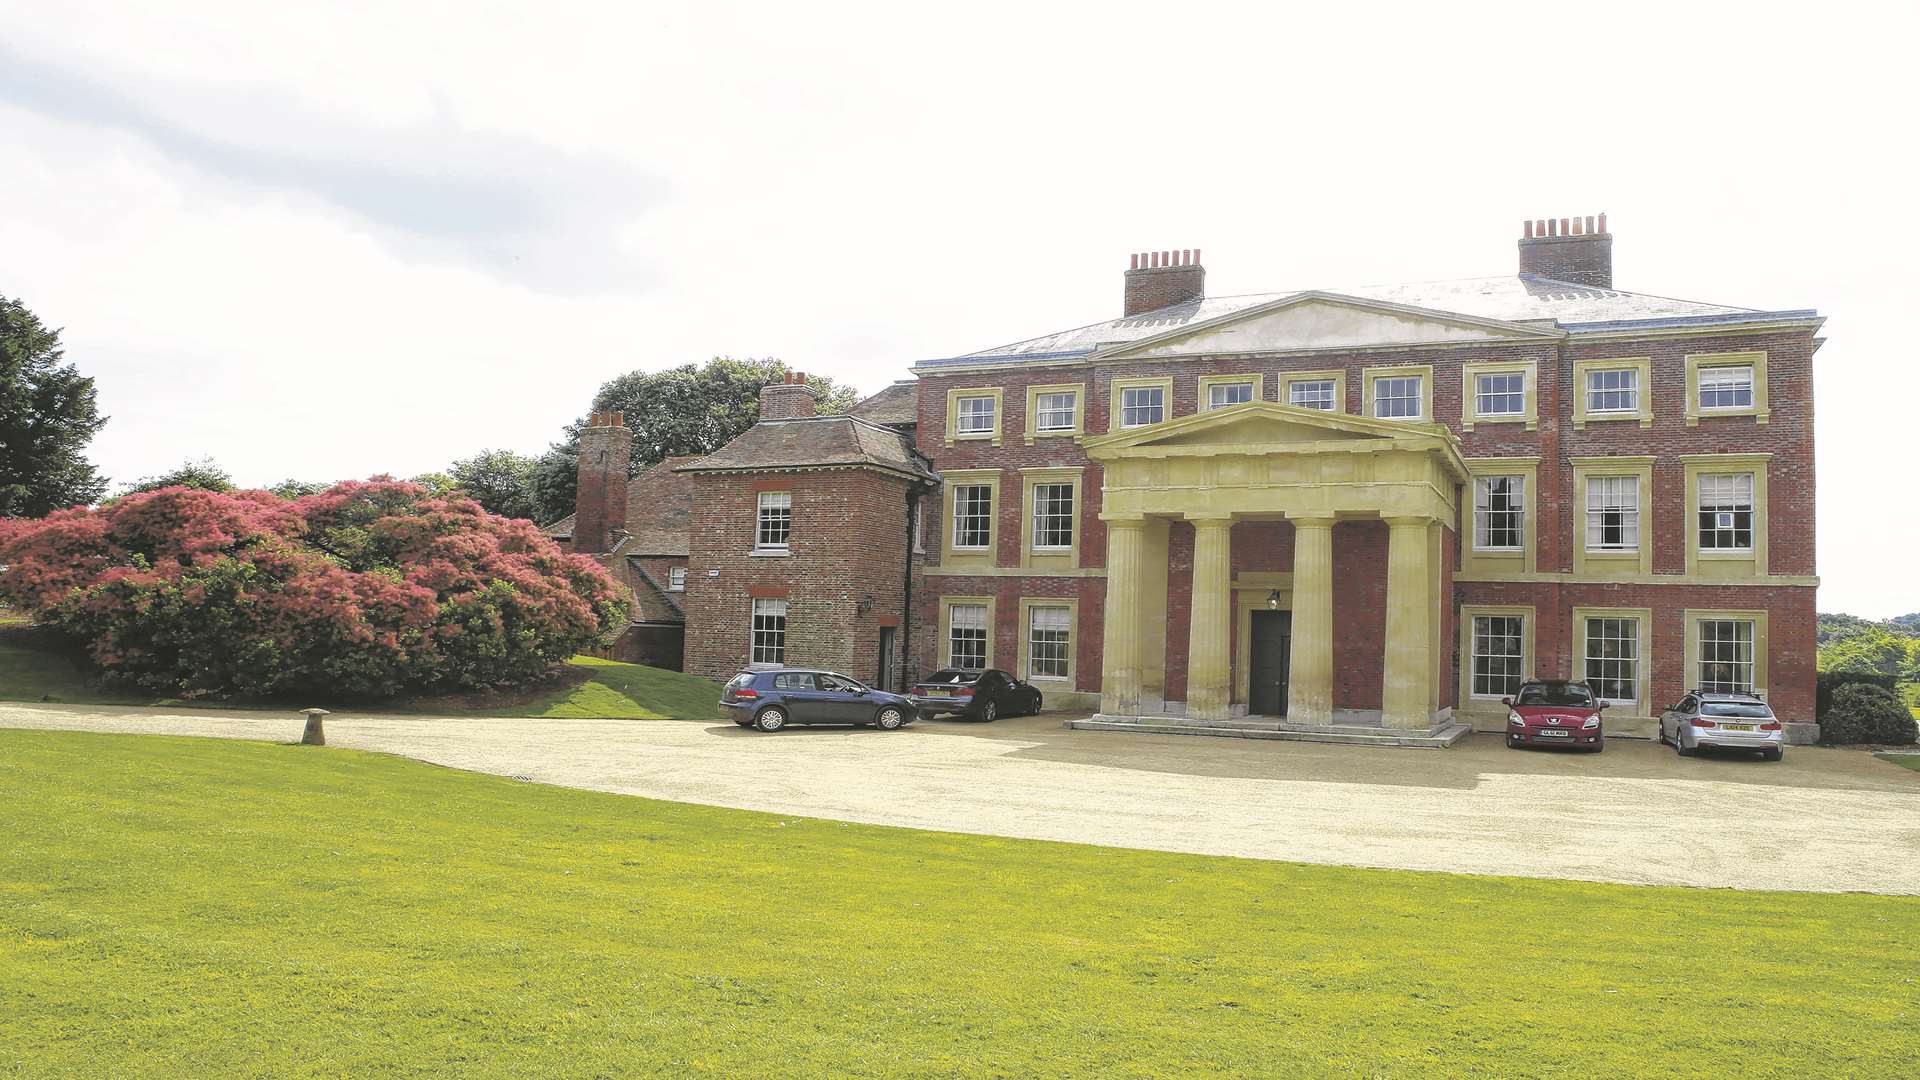 The manor house at Goodnestone Park